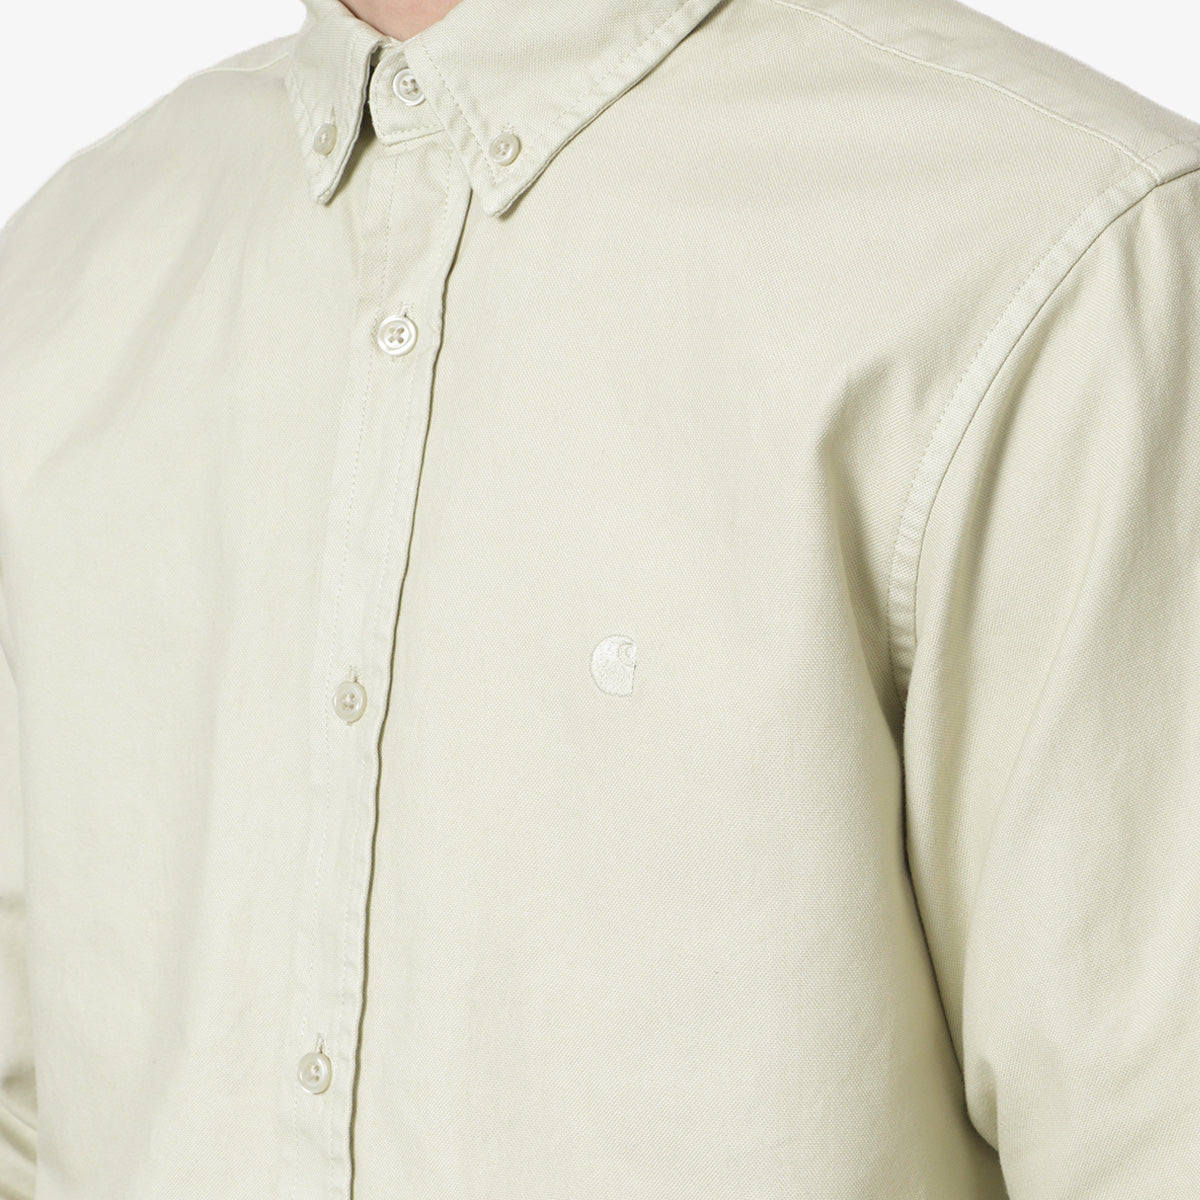 Carhartt WIP Bolton Long Sleeve Shirt, Beryl (Garment Dyed), Detail Shot 2